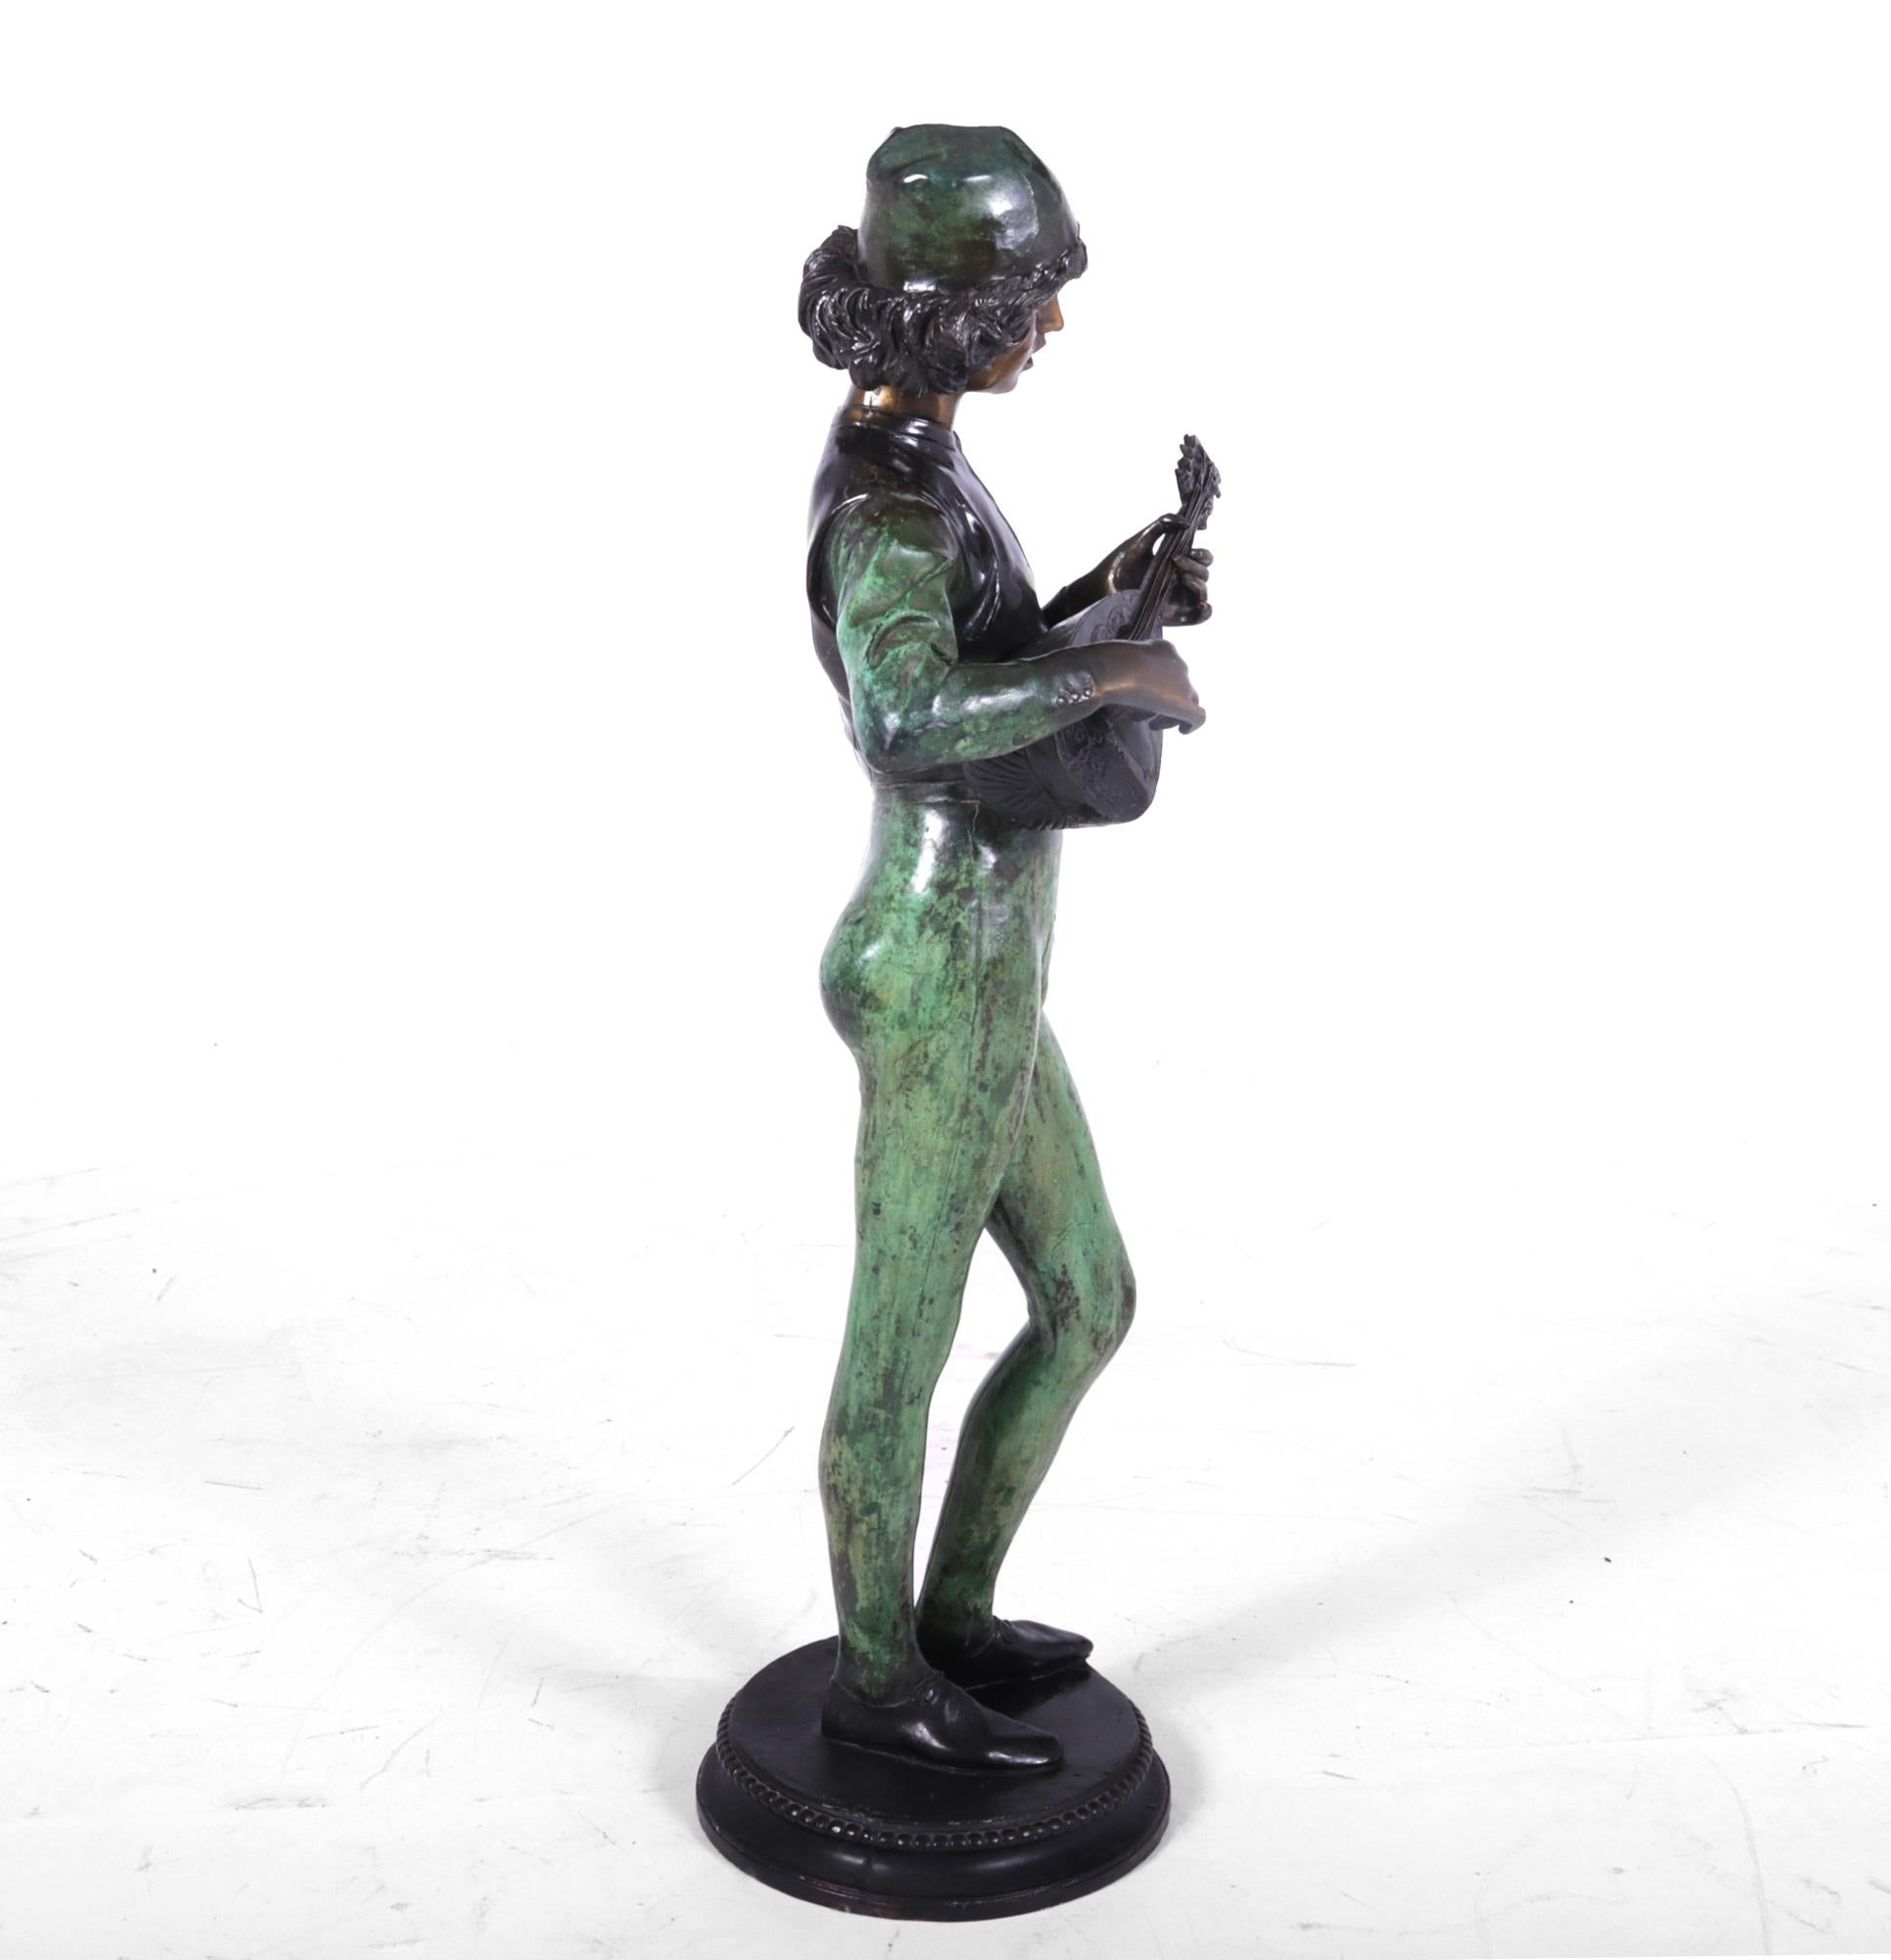 Antique Bronze Sculpture ‘Standing Music Man’ by Barbedienne Fondeur c1880 8